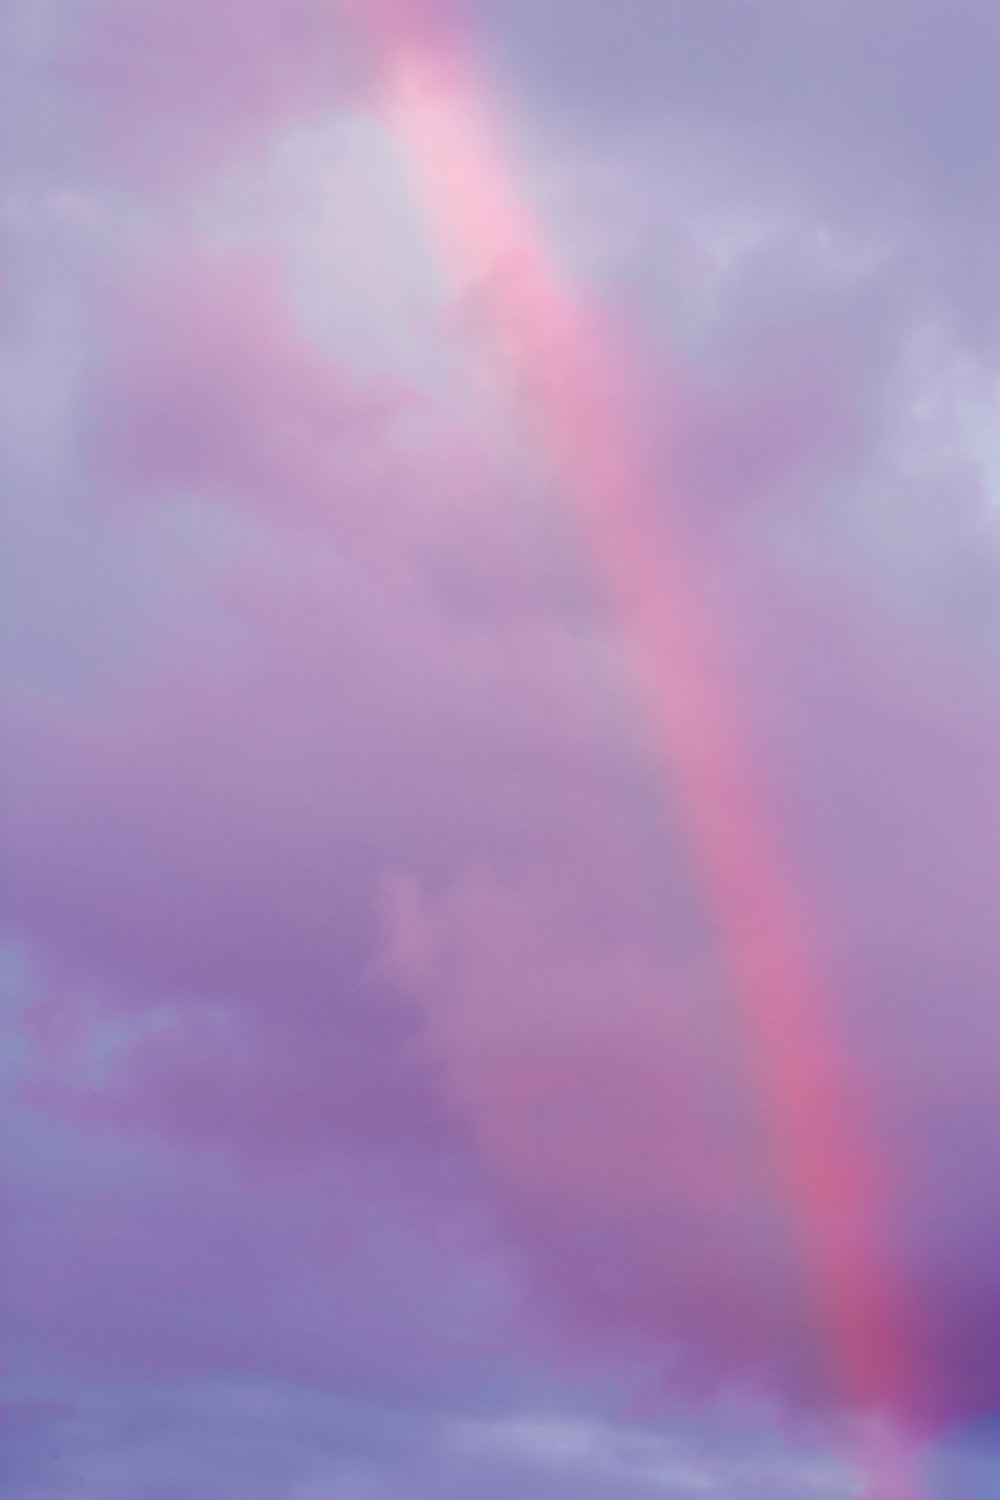 Rainbow During Daytime Photo Image